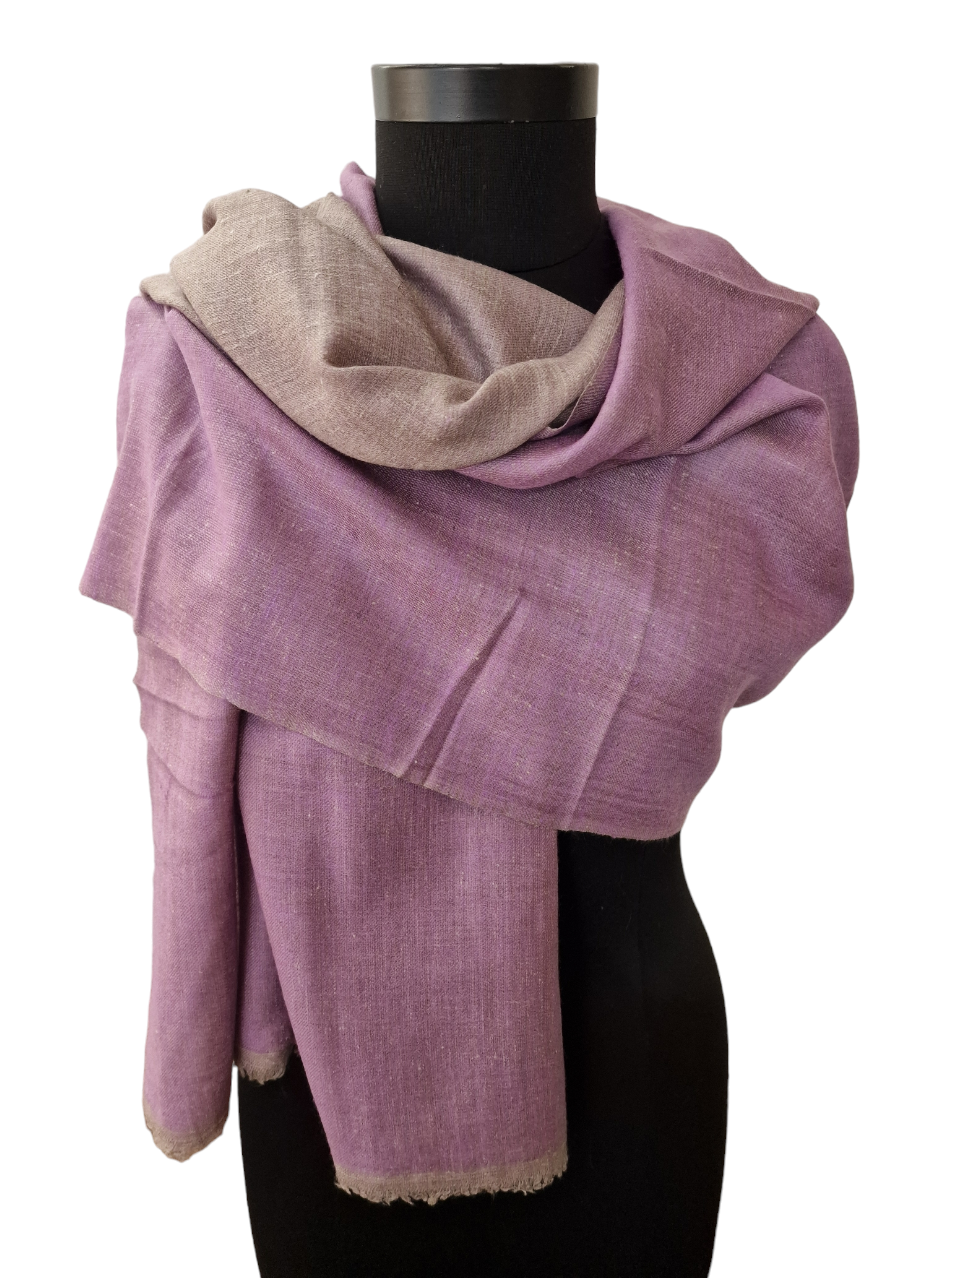 Lavendel og sølvgrått pashmina sjal (5)